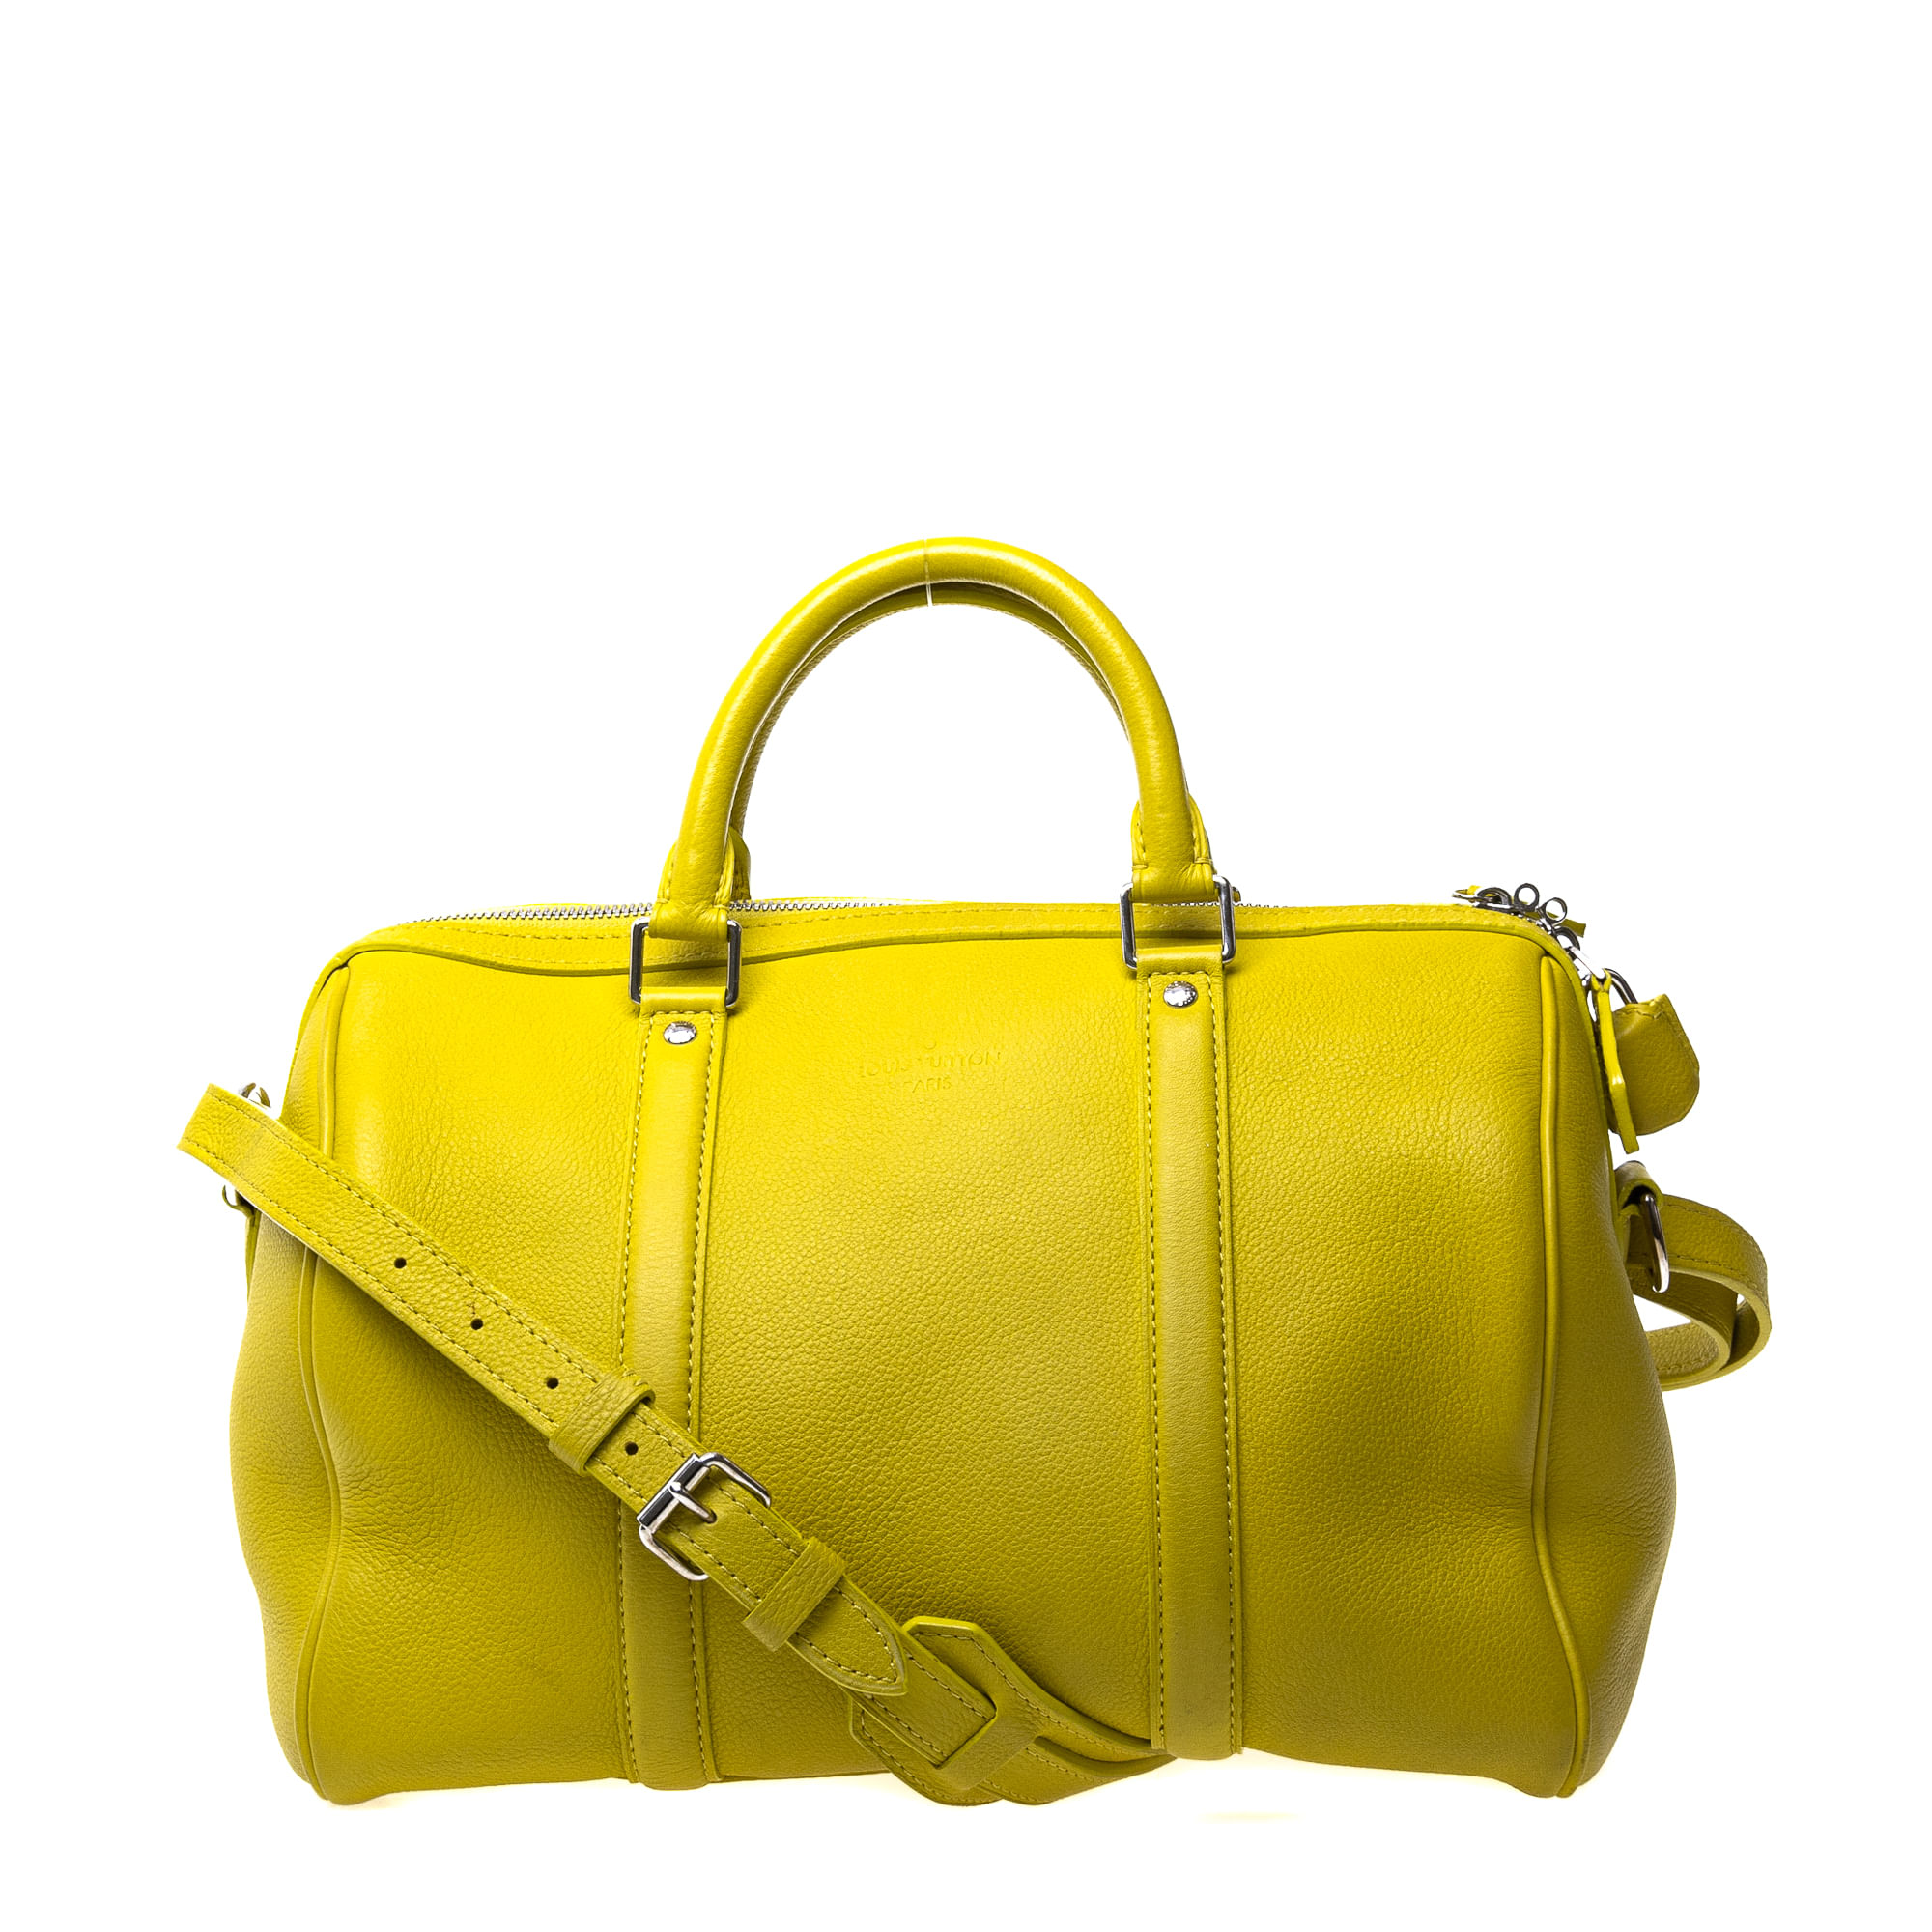 Bolsa Louis Vuitton - Valeria bolsas e acessórios